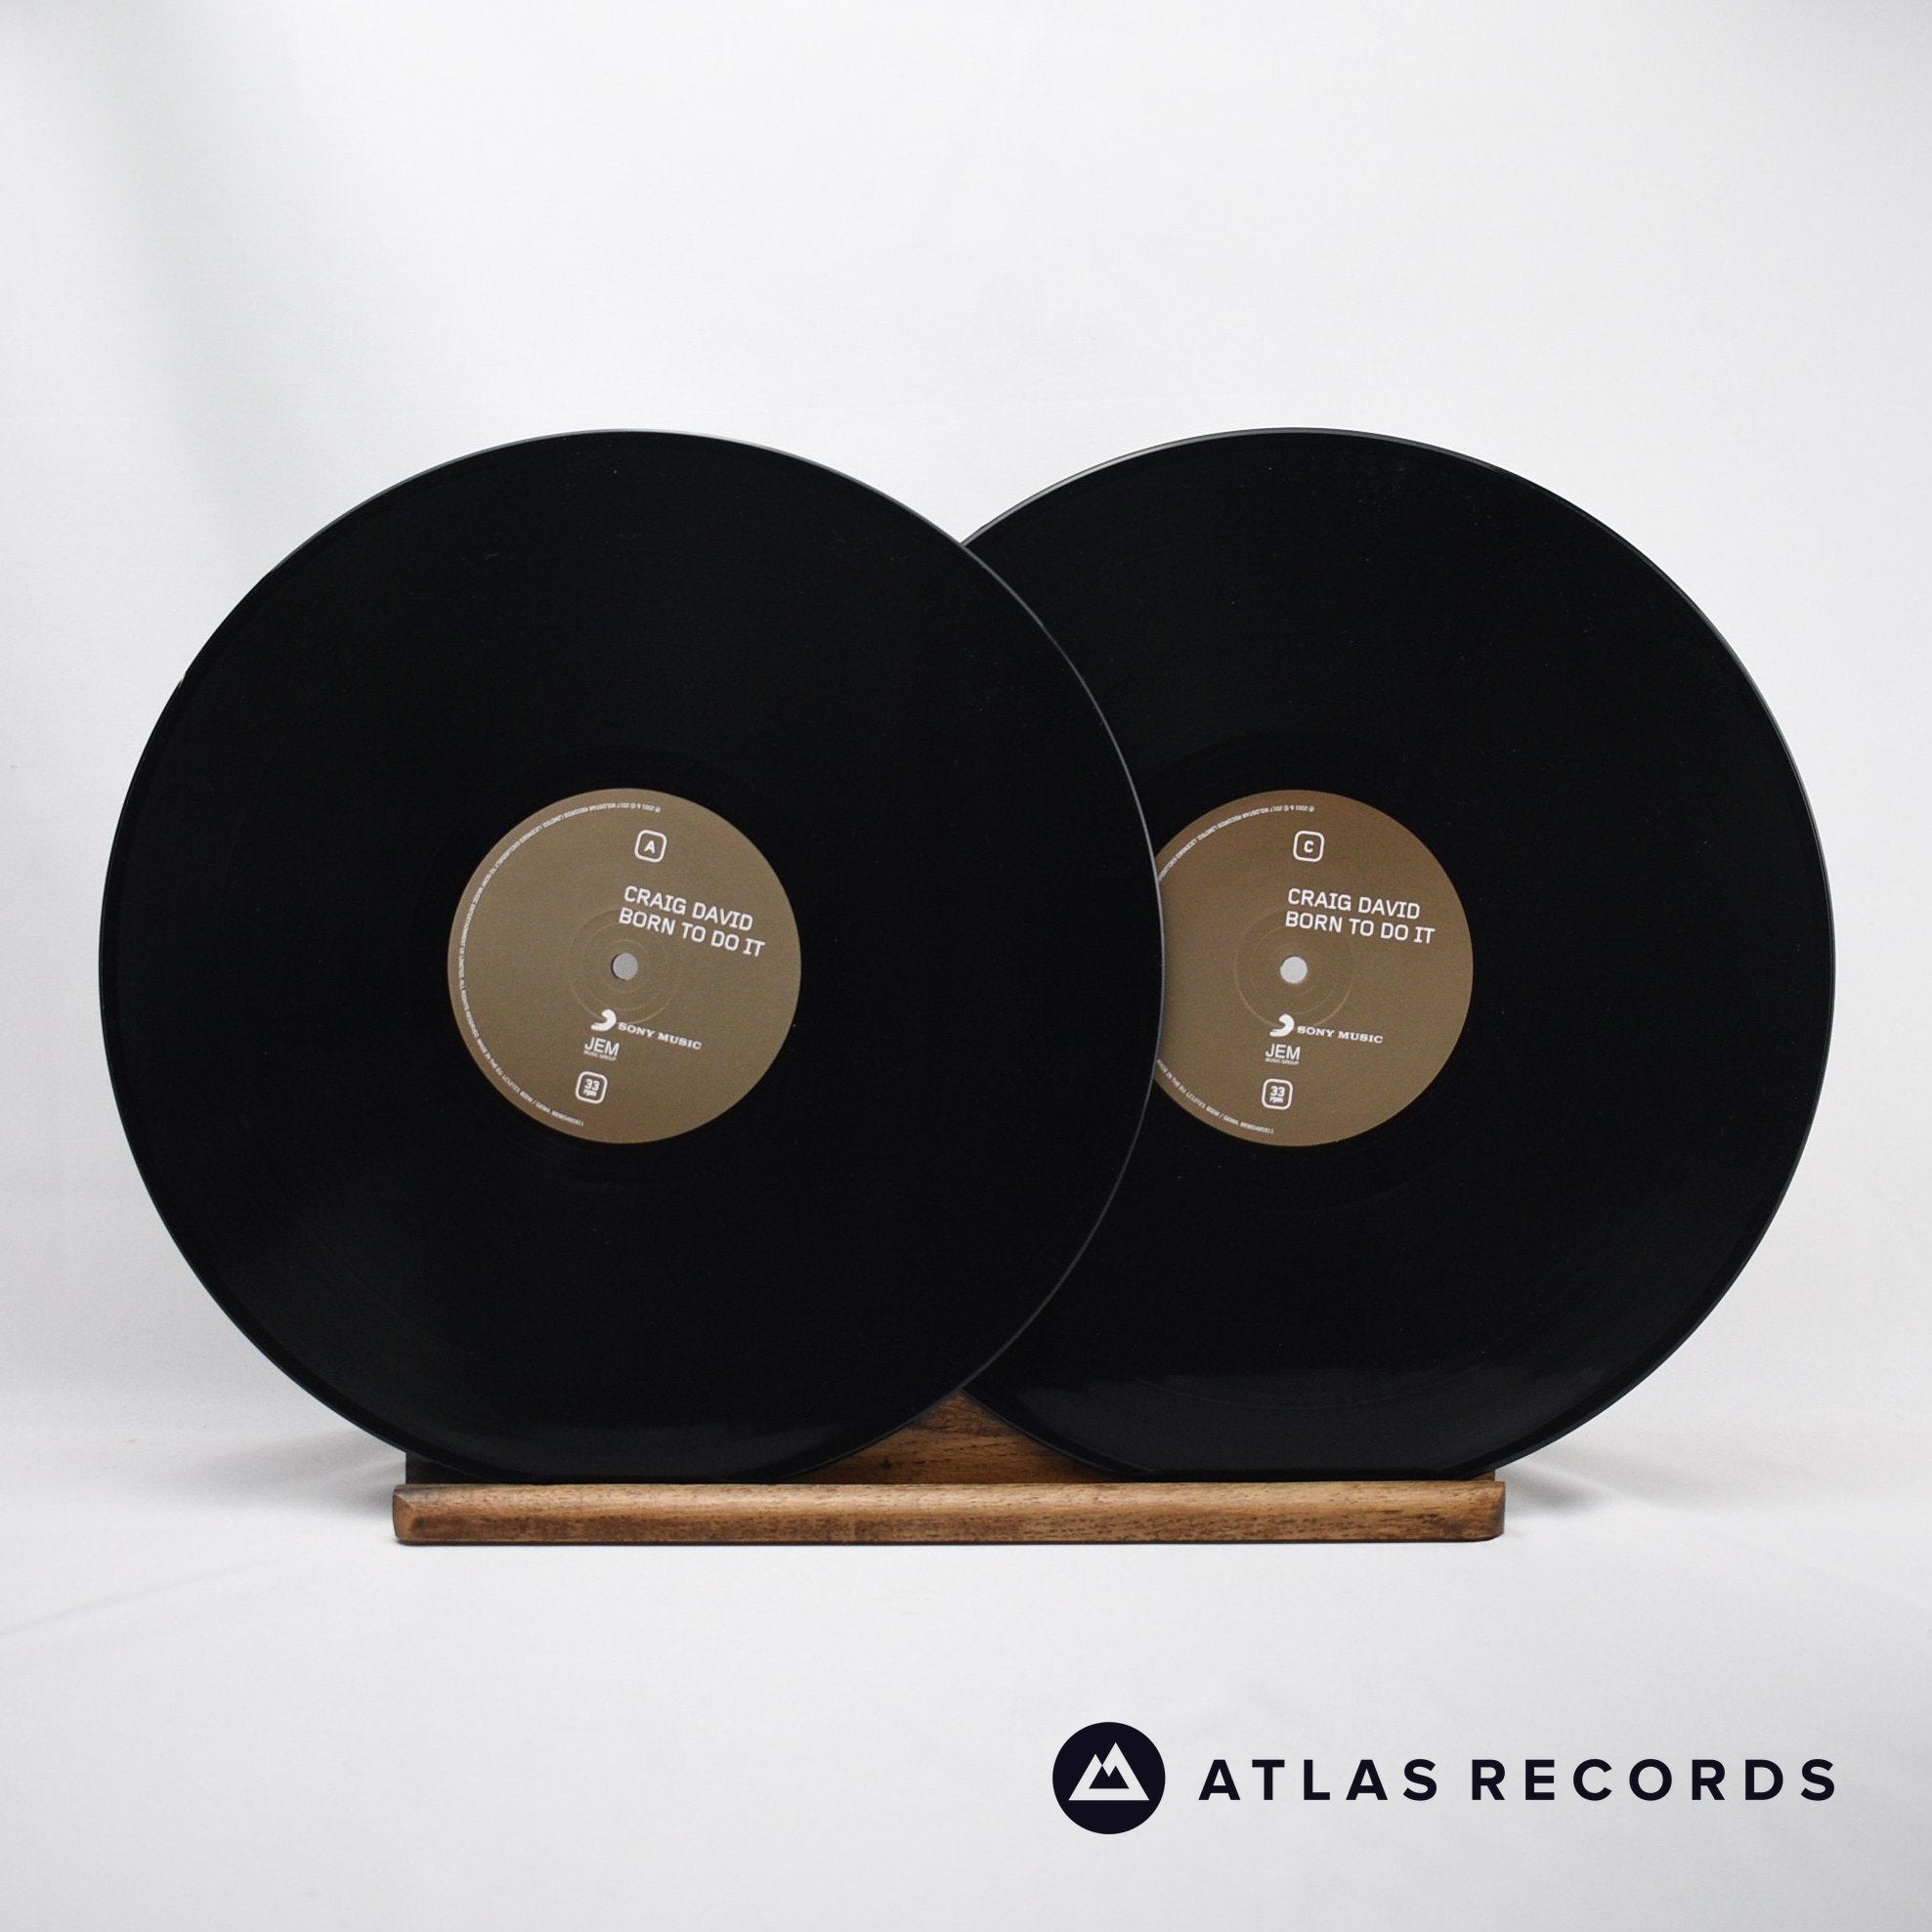 Craig David - Born To Do It - Double LP Vinyl Record - NM/NM